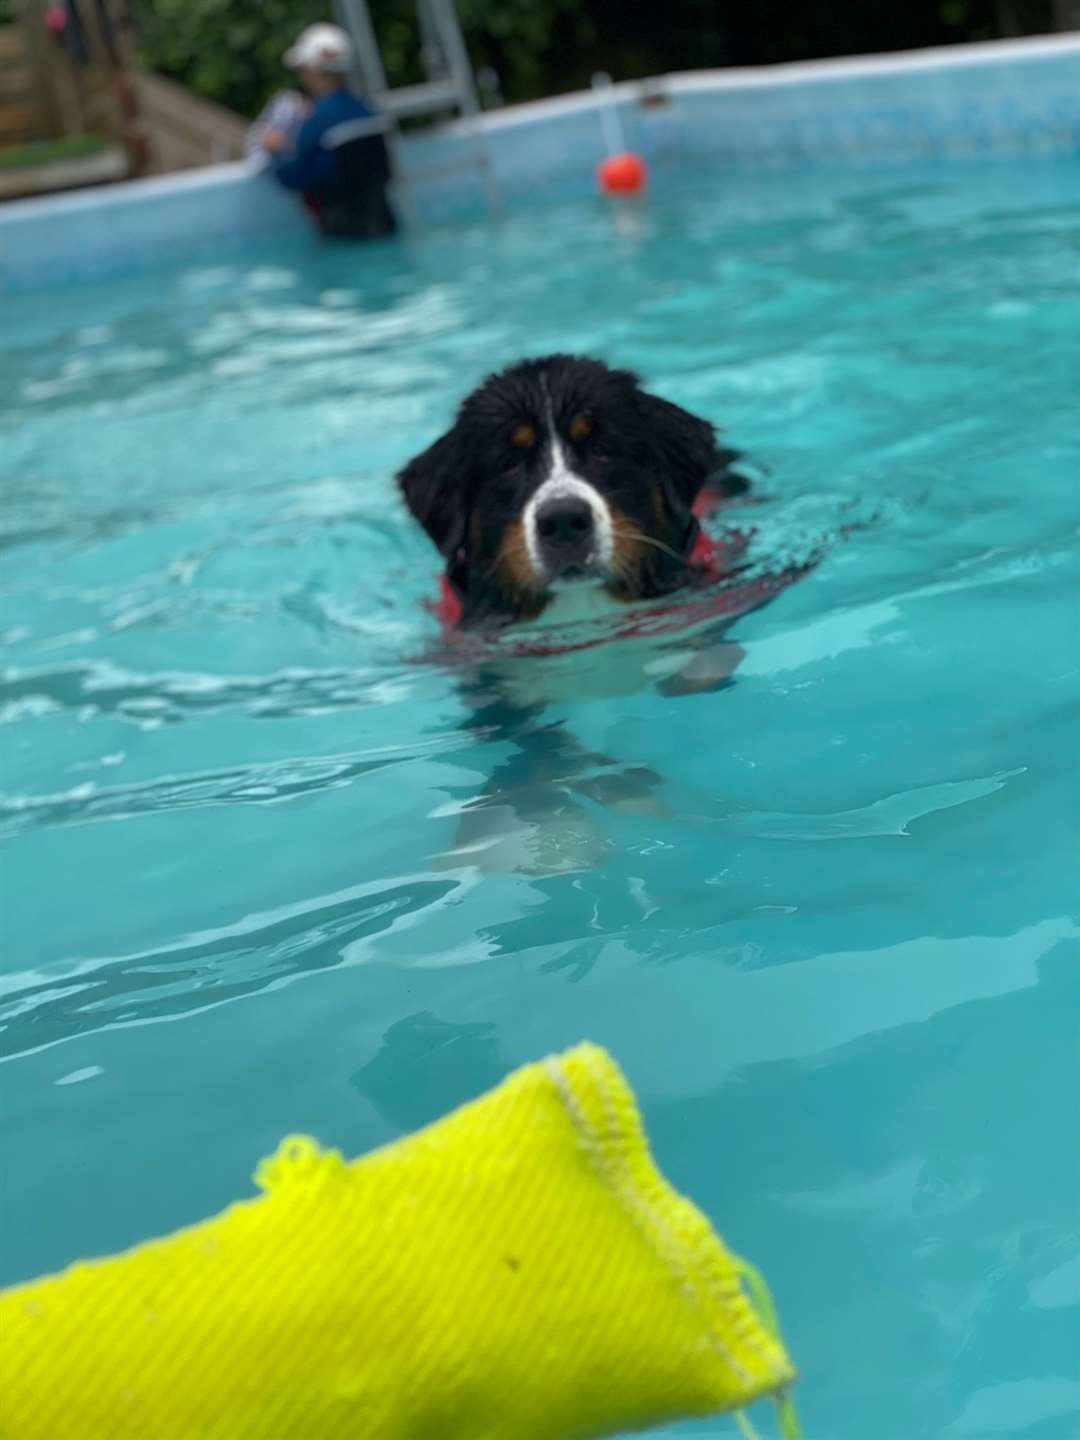 Hudson enjoys swimming